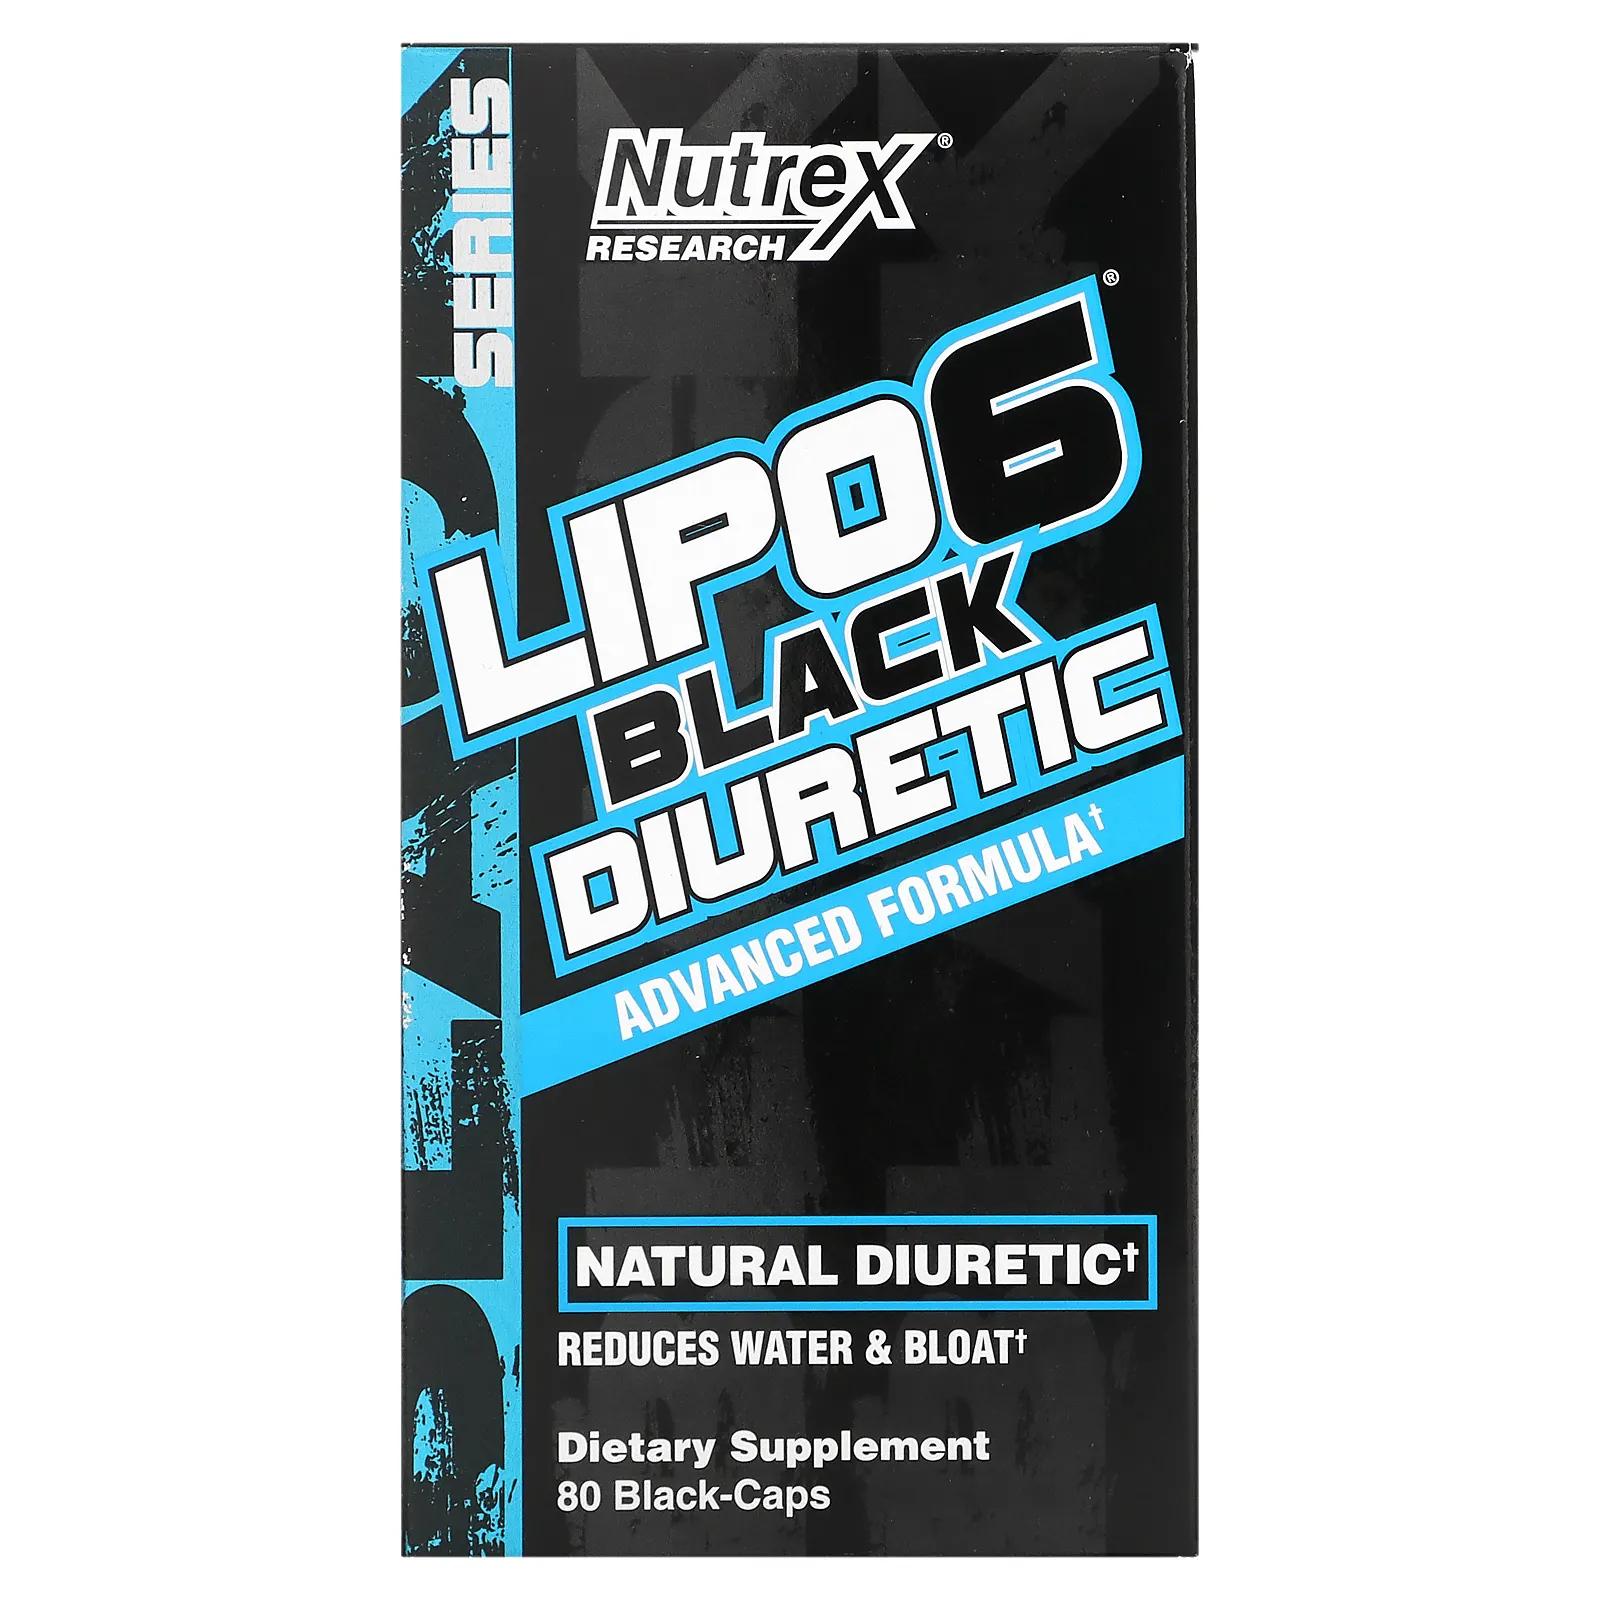 Nutrex Research LIPO-6 Black Diuretic 80 Black-Caps